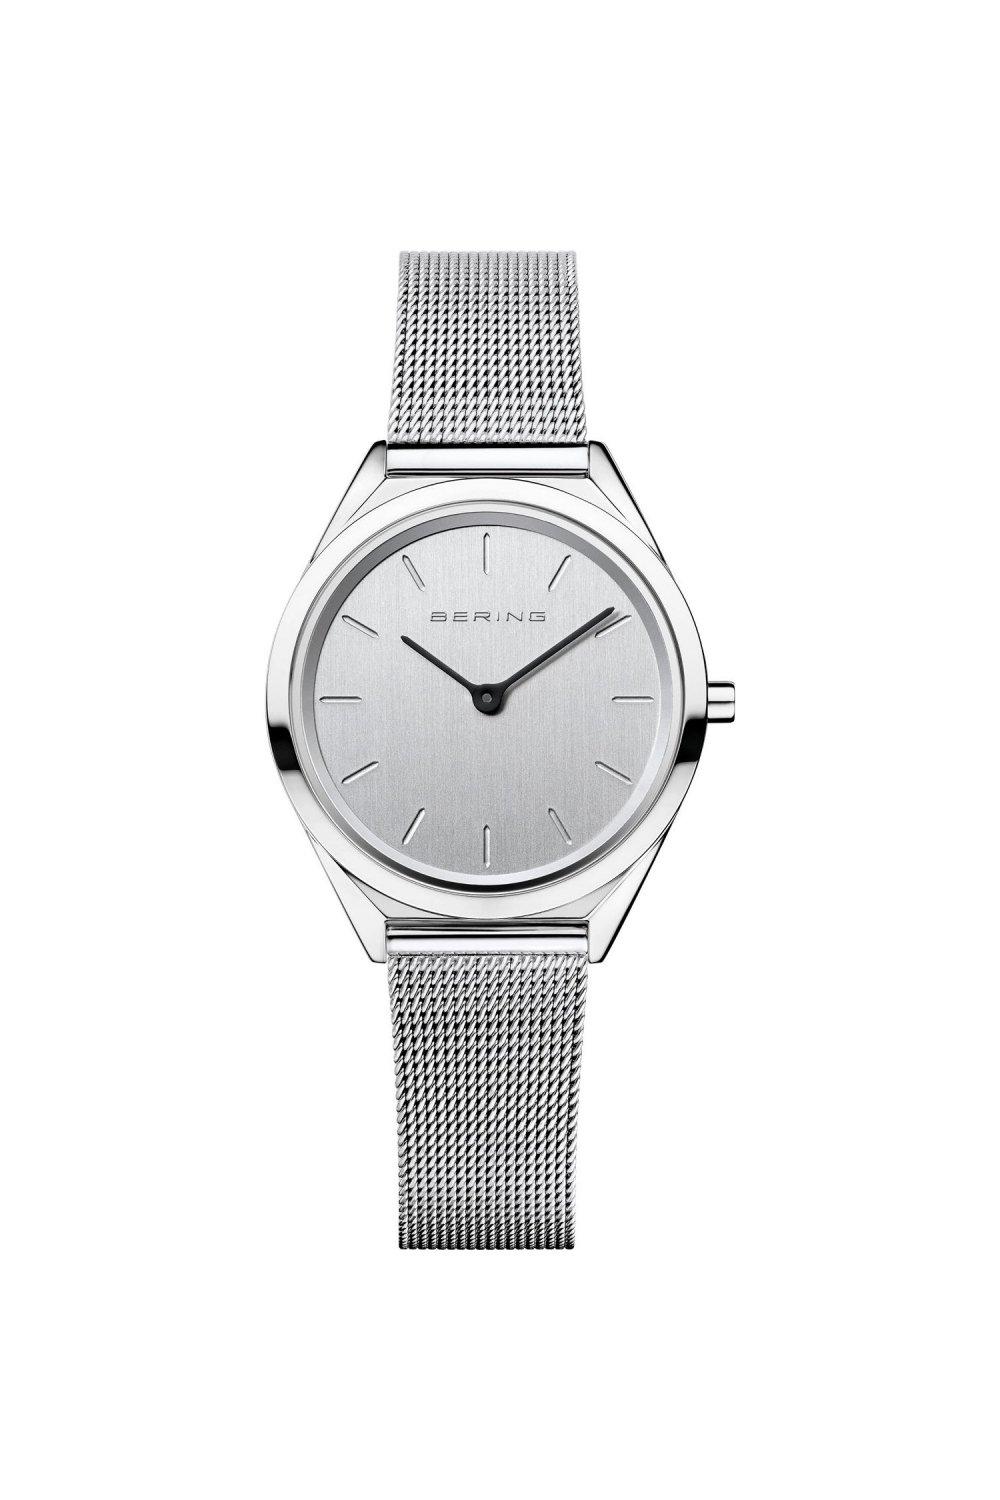 ultra slim stainless steel classic analogue quartz watch - 17031-000